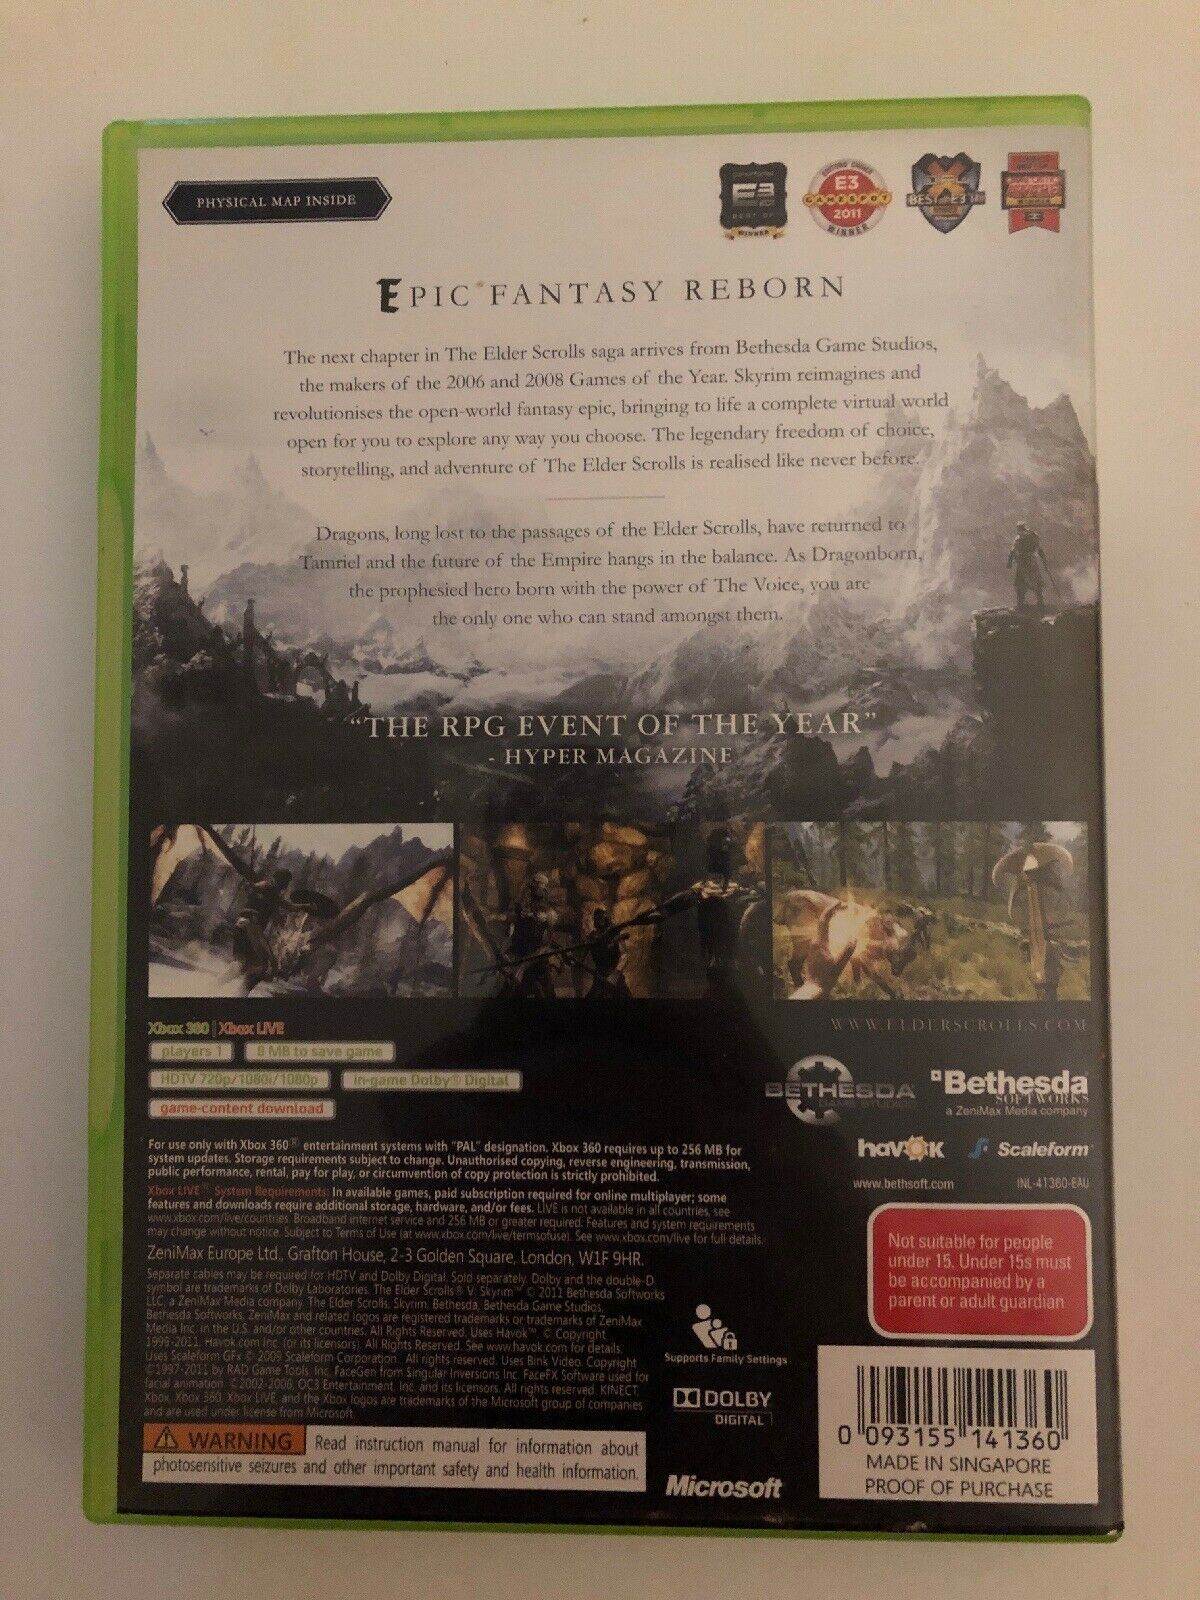 The Elder Scrolls V - Skyrim (Microsoft Xbox 360, 2011) PAL with Manual